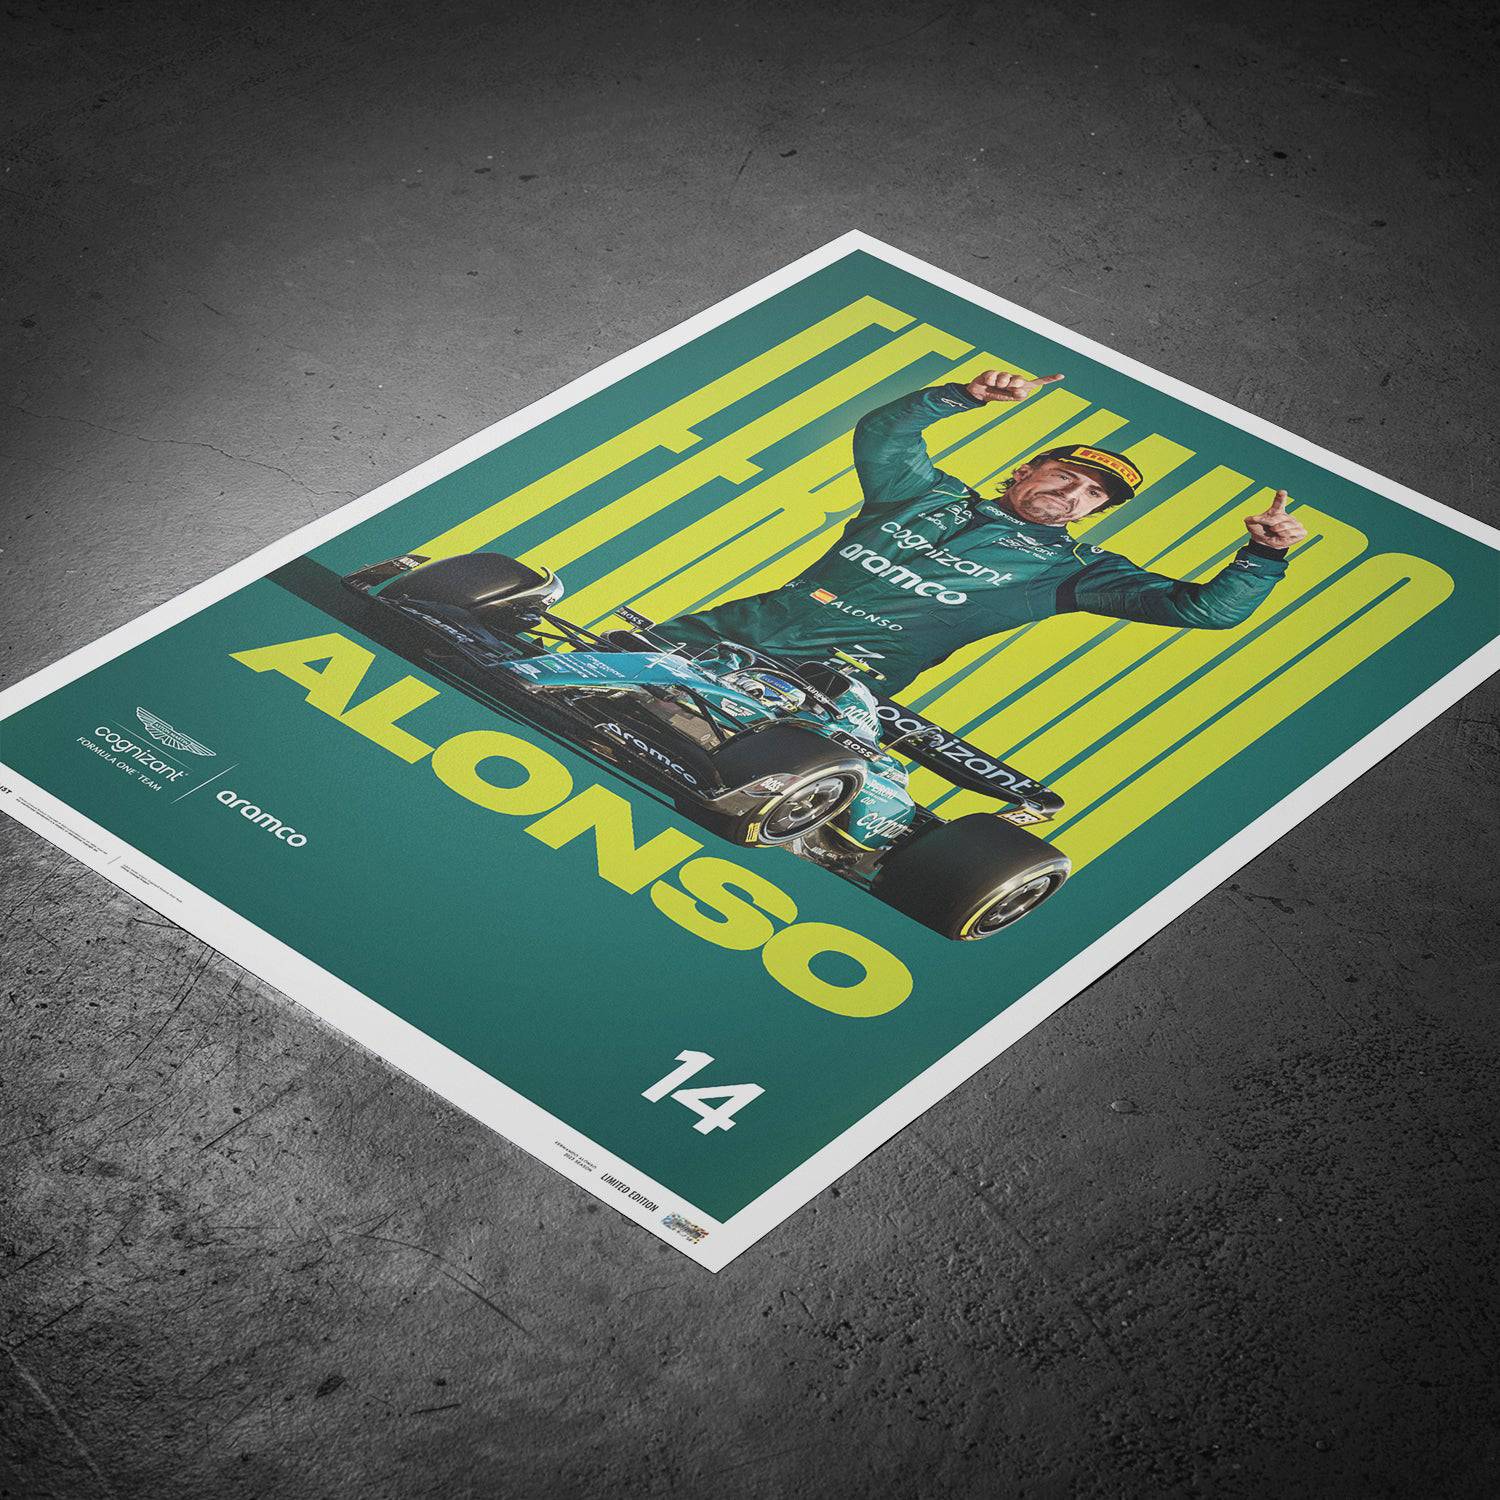 🥇 Alonso Poster Aston Martin Formula 1